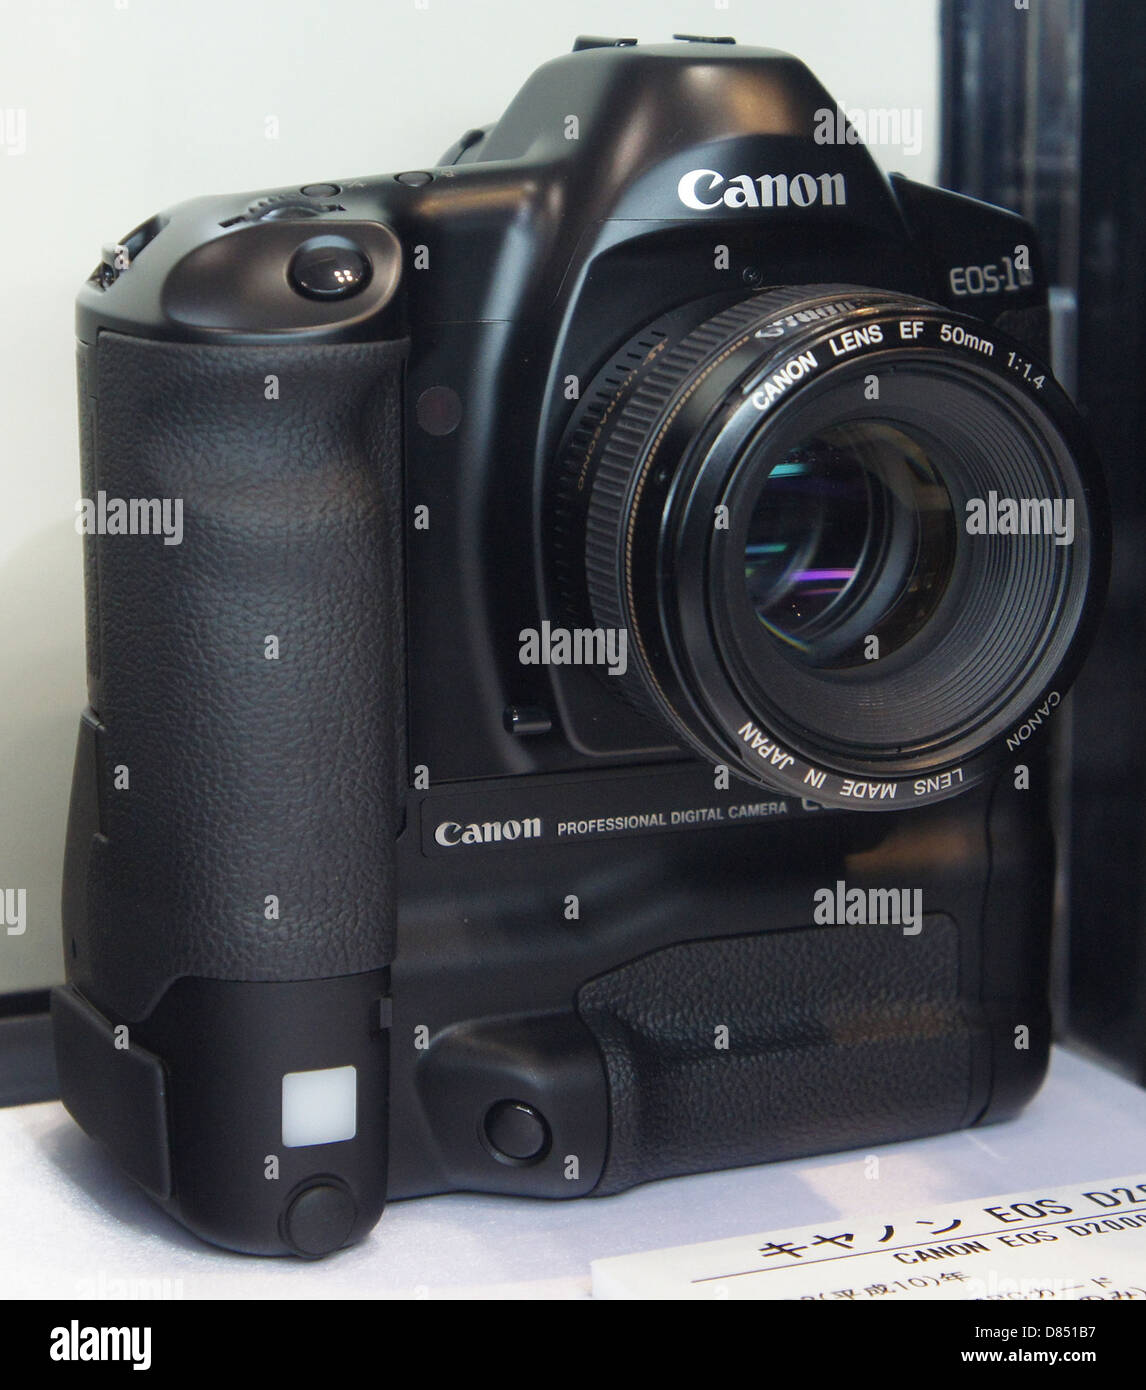 Canon EOS D2000 right CP 2011 Stock Photo - Alamy